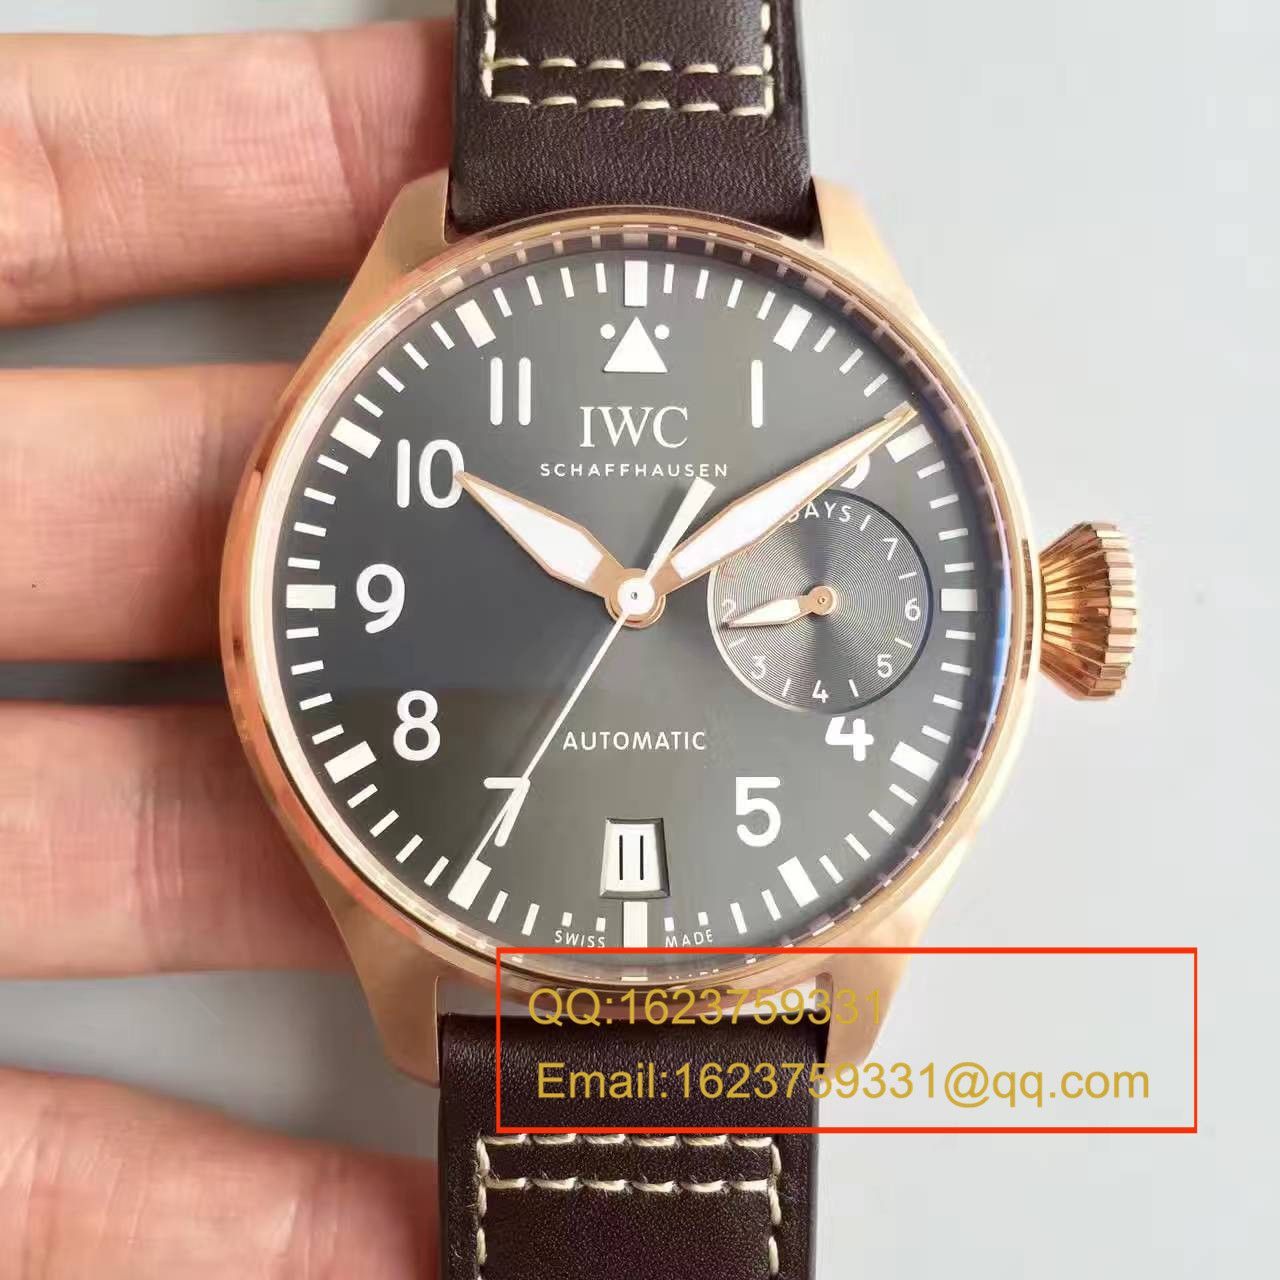 【ZF厂1:1精仿手表】万国 大型飞行员腕表“小王子”特别版系列 IW500917腕表 